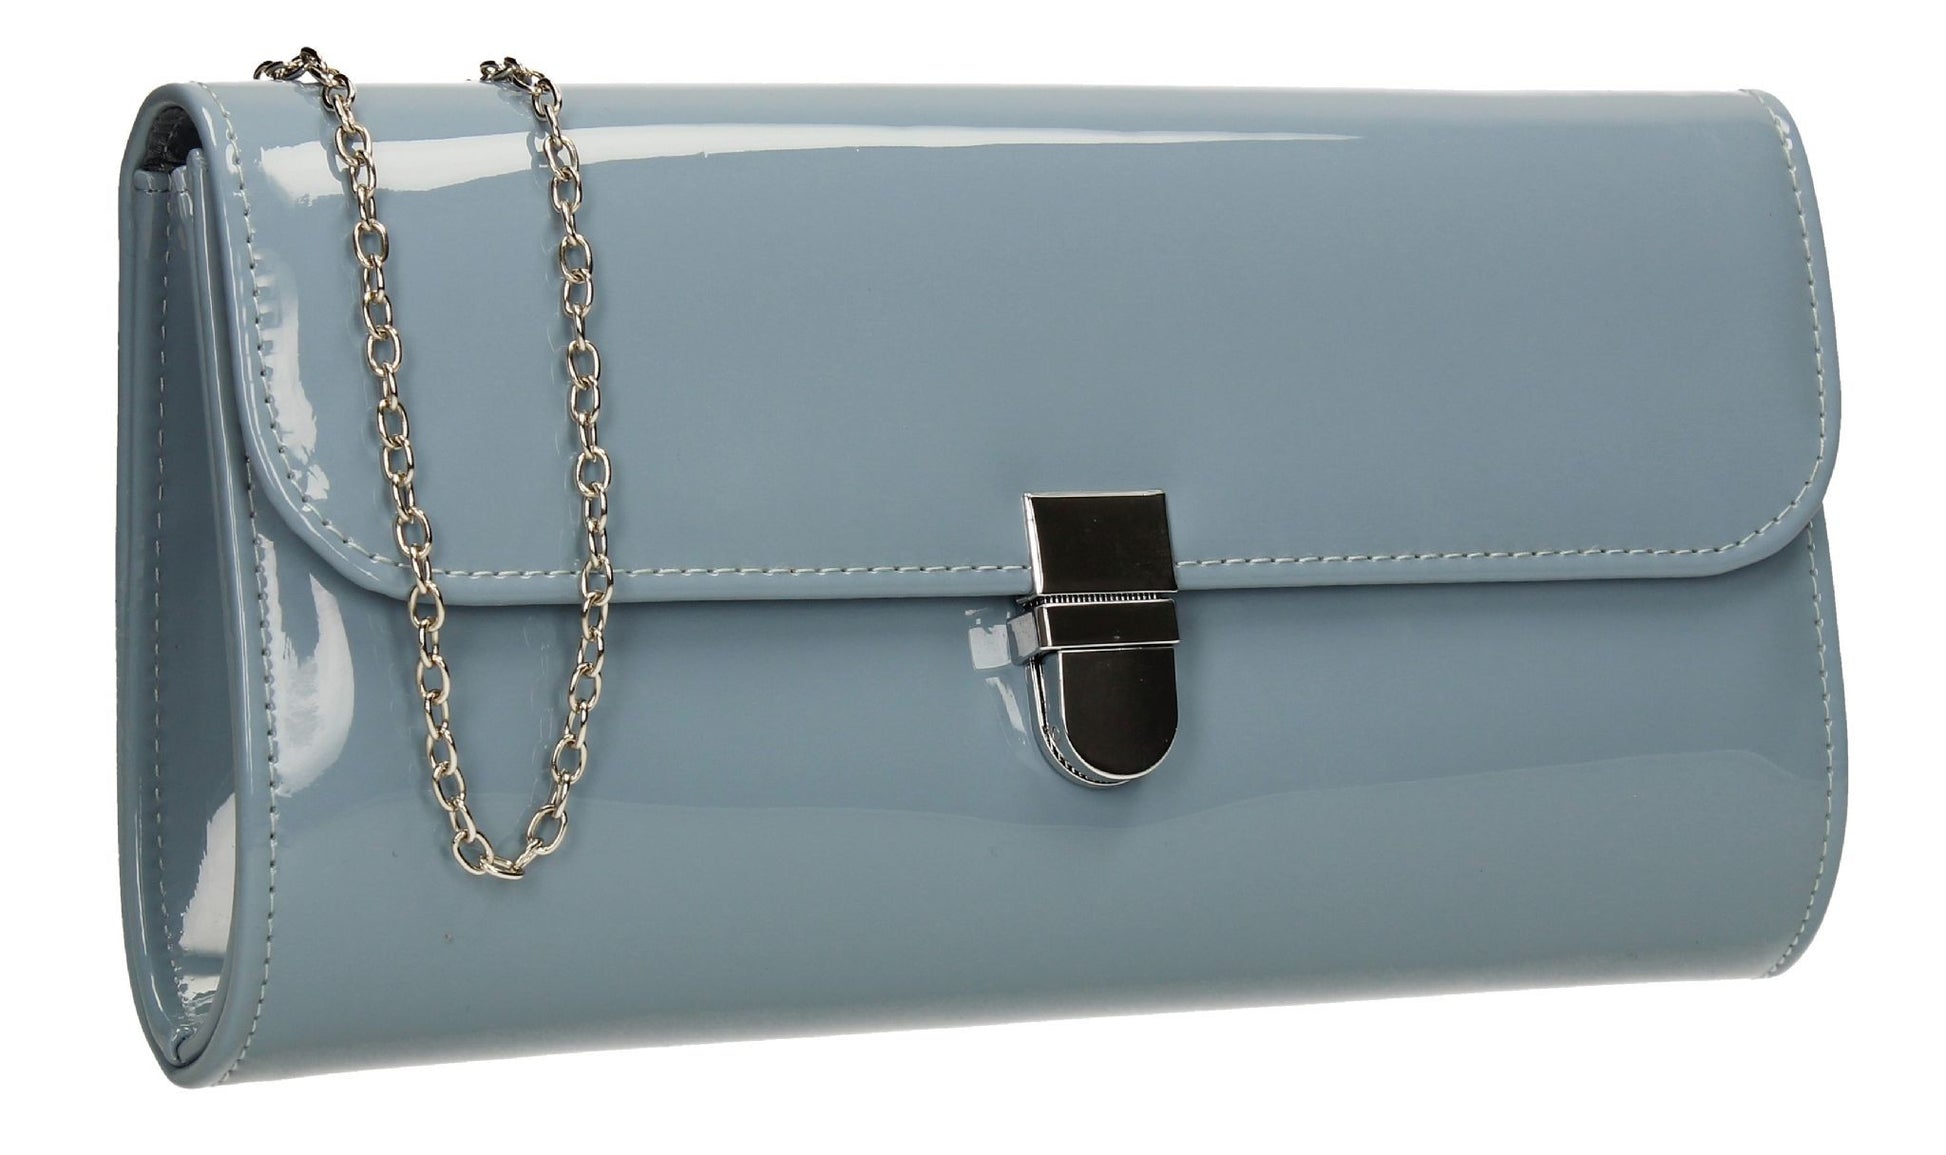 SWANKYSWANS Roxy Clutch Bag Blue Cute Cheap Clutch Bag For Weddings School and Work